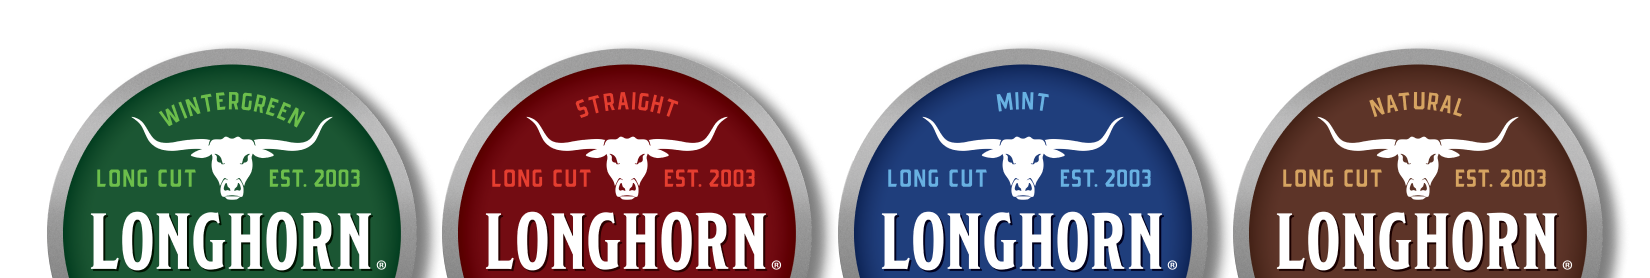 Longhorn Rewards Bottom Image